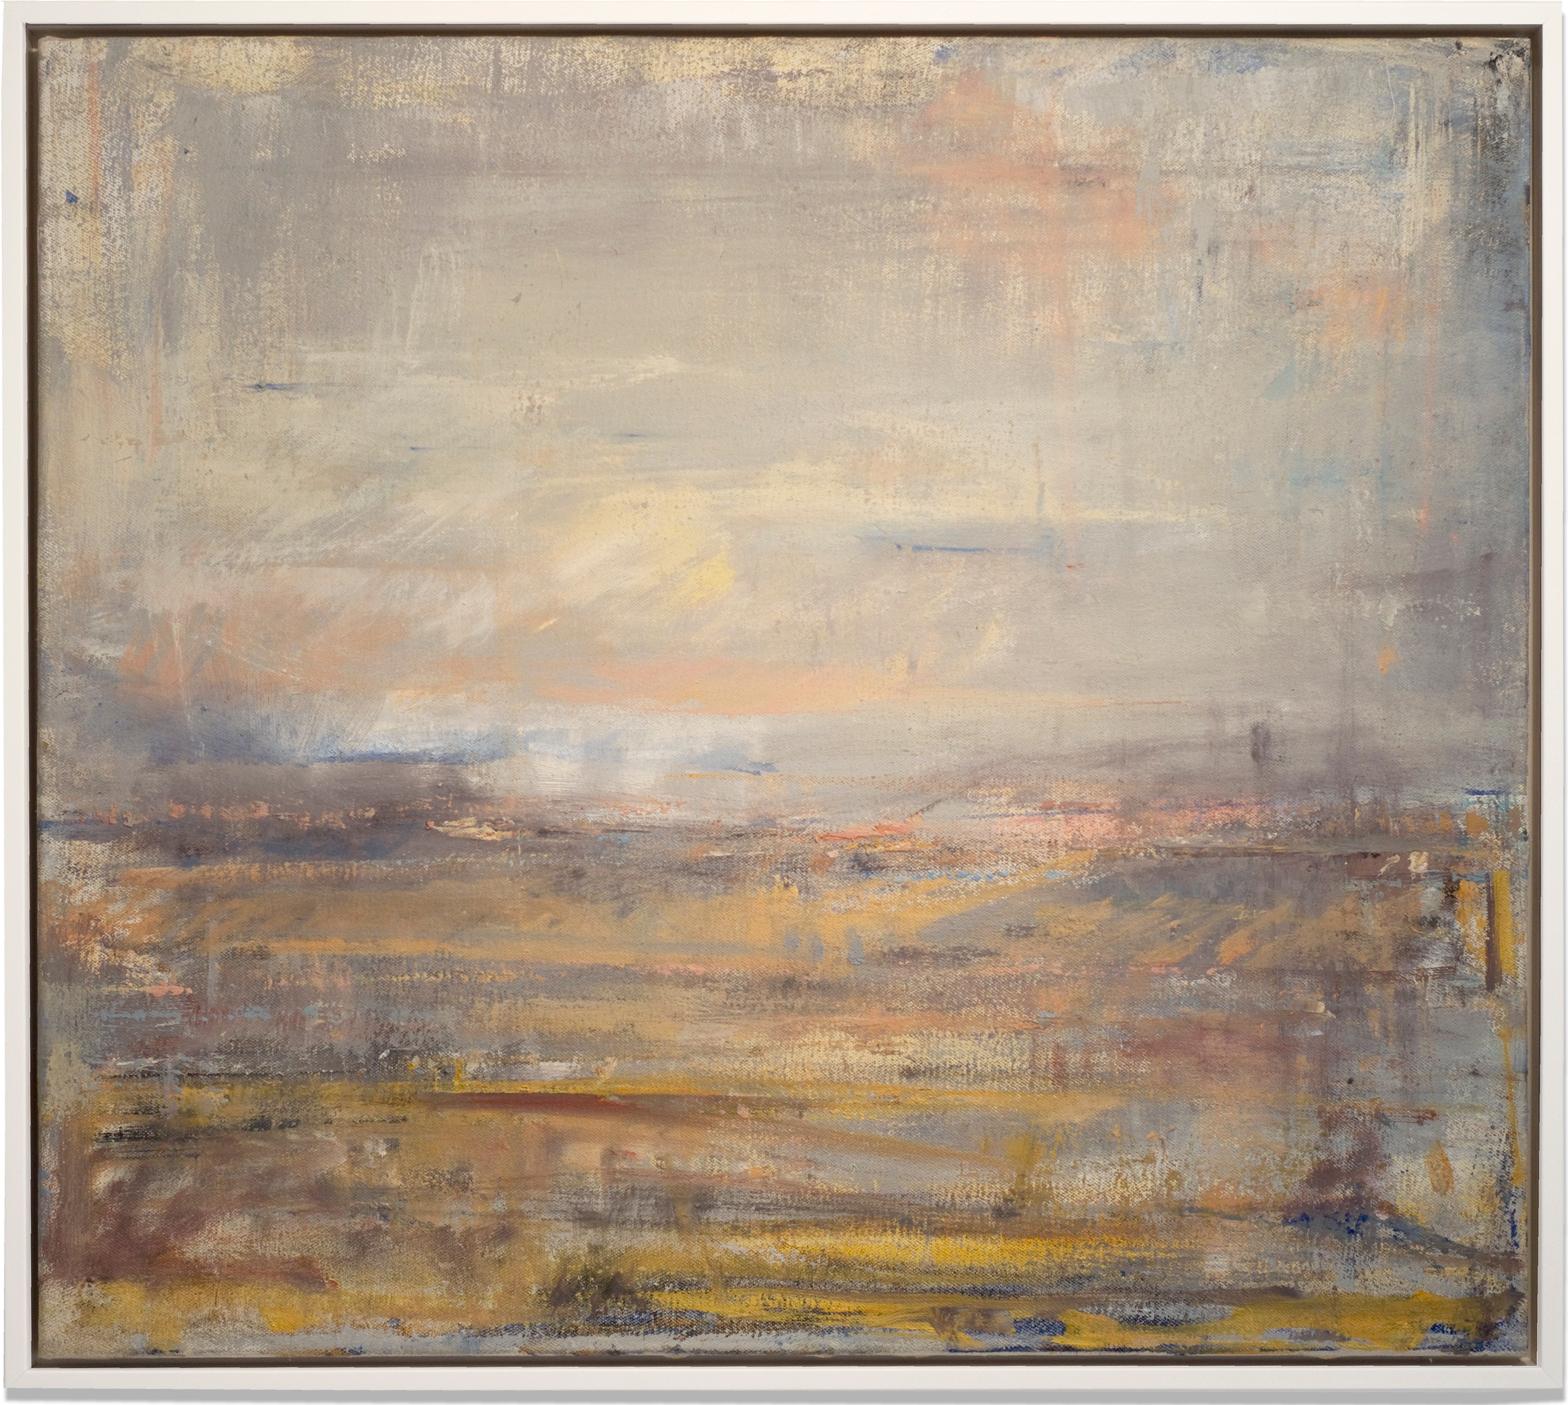 Gloria Sáez Abstract Painting - Gloria Saez, "Paisaje - Landscape" Oil on canvas landscape